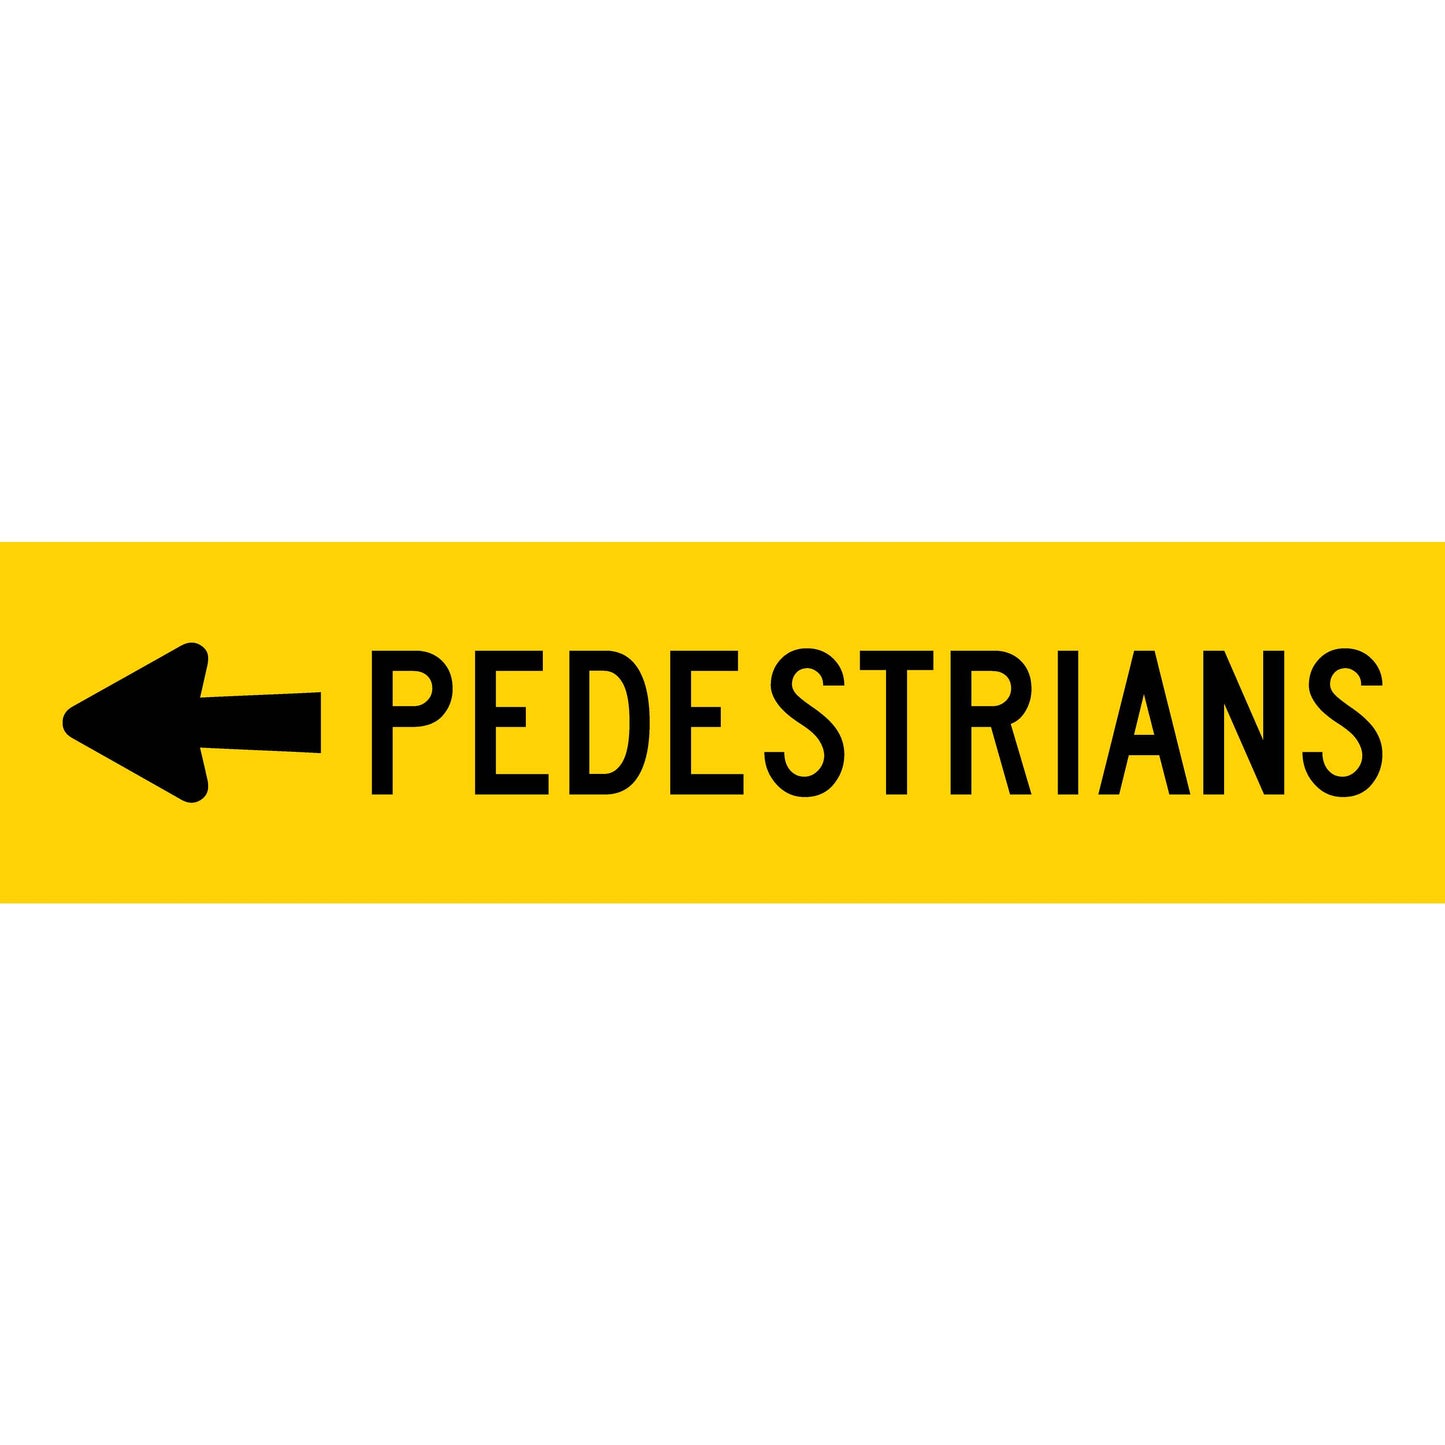 Pedestrians (Arrow Left) Long Skinny Multi Message Reflective Traffic Sign